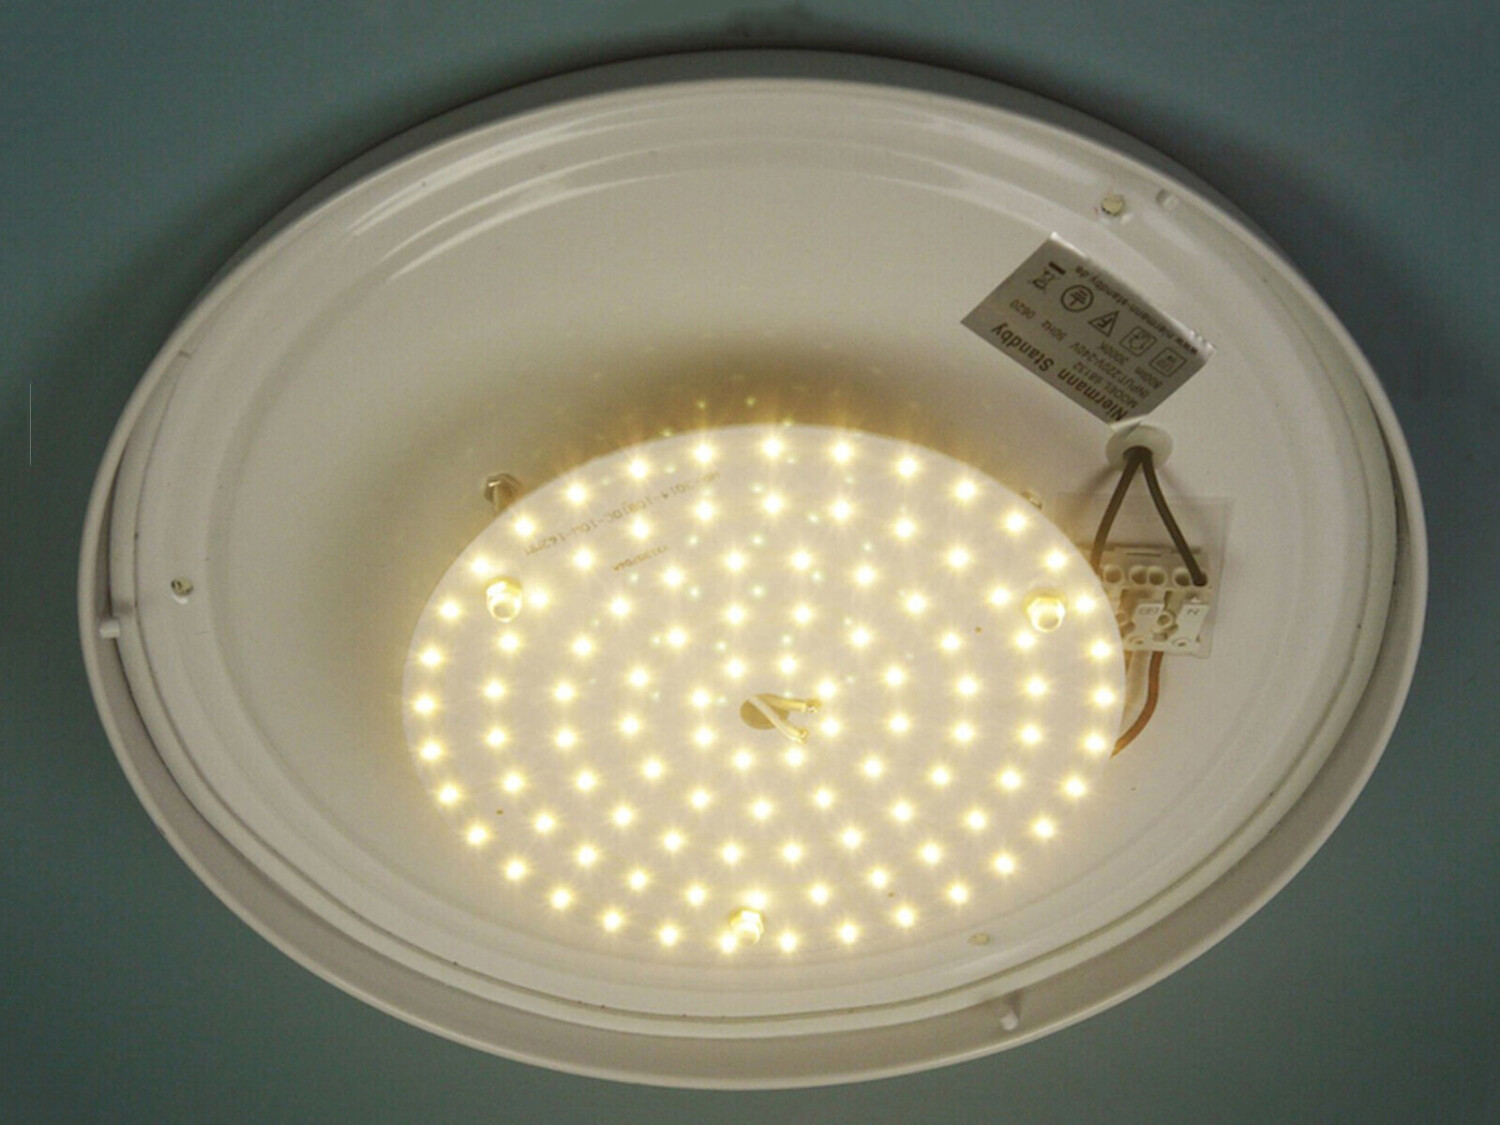 Niermann LED Flurlampe Dielenbeleuchtung OPALGLAS matt rund Ø 30cm  Glaslampe Wandleuchte ab 56,40 € | Preisvergleich bei